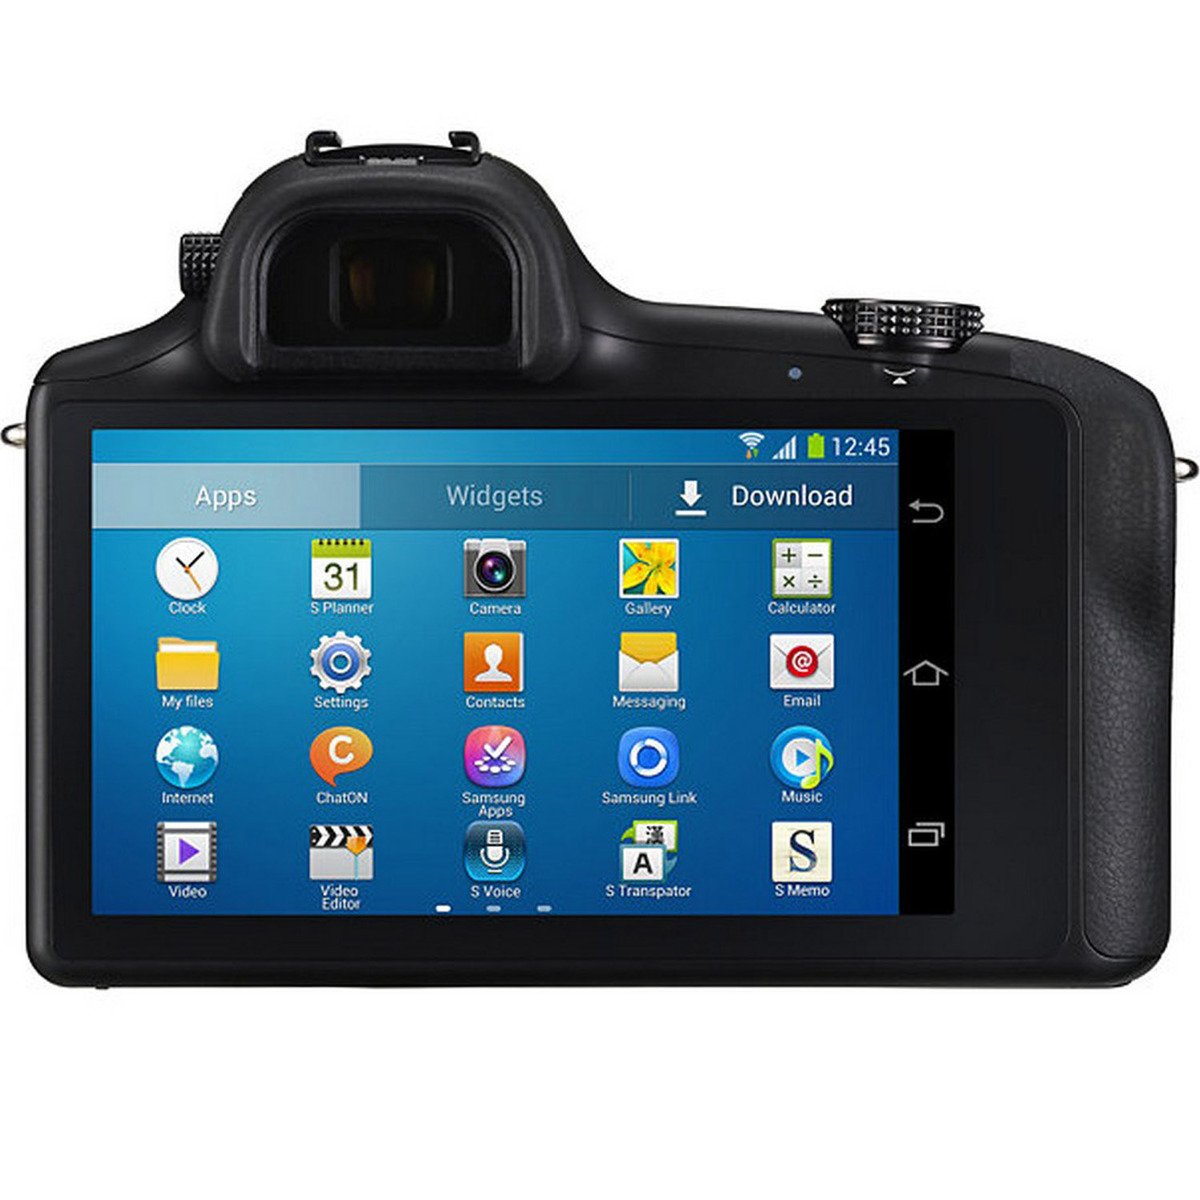 Samsung Galaxy DSLR Camera GN100 3G 18-55mm Black